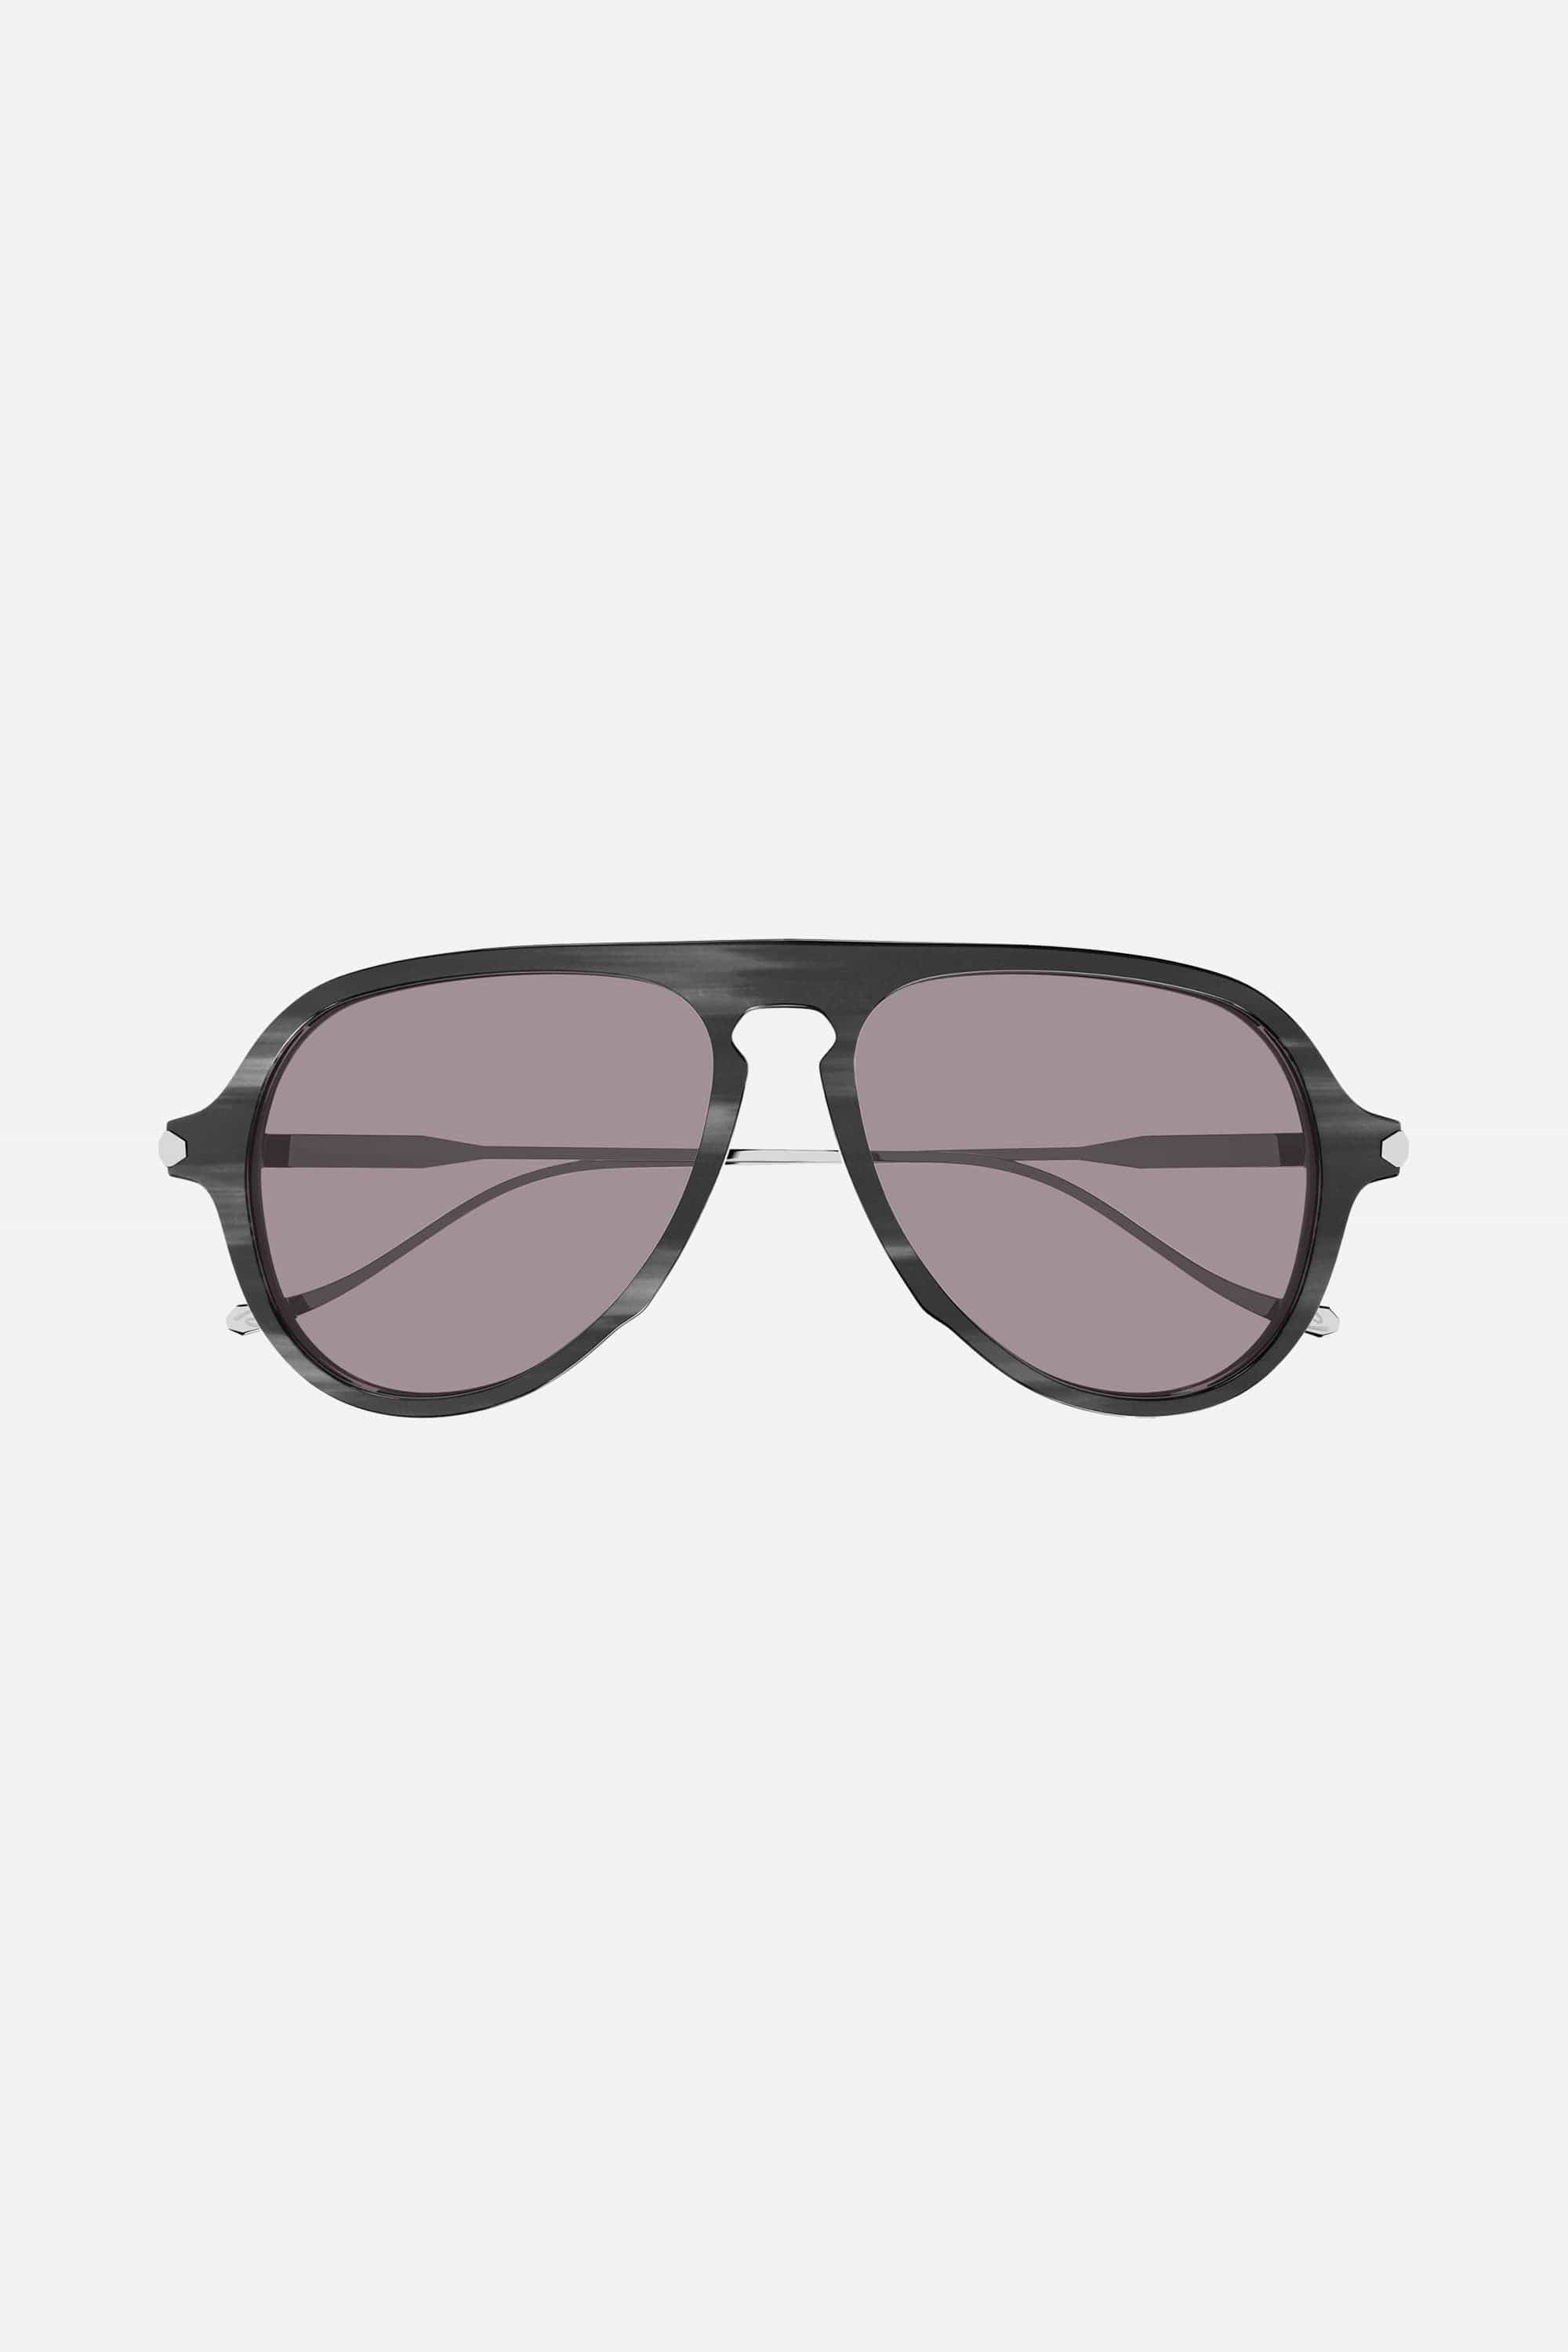 Brioni pilot black sunglasses - Eyewear Club